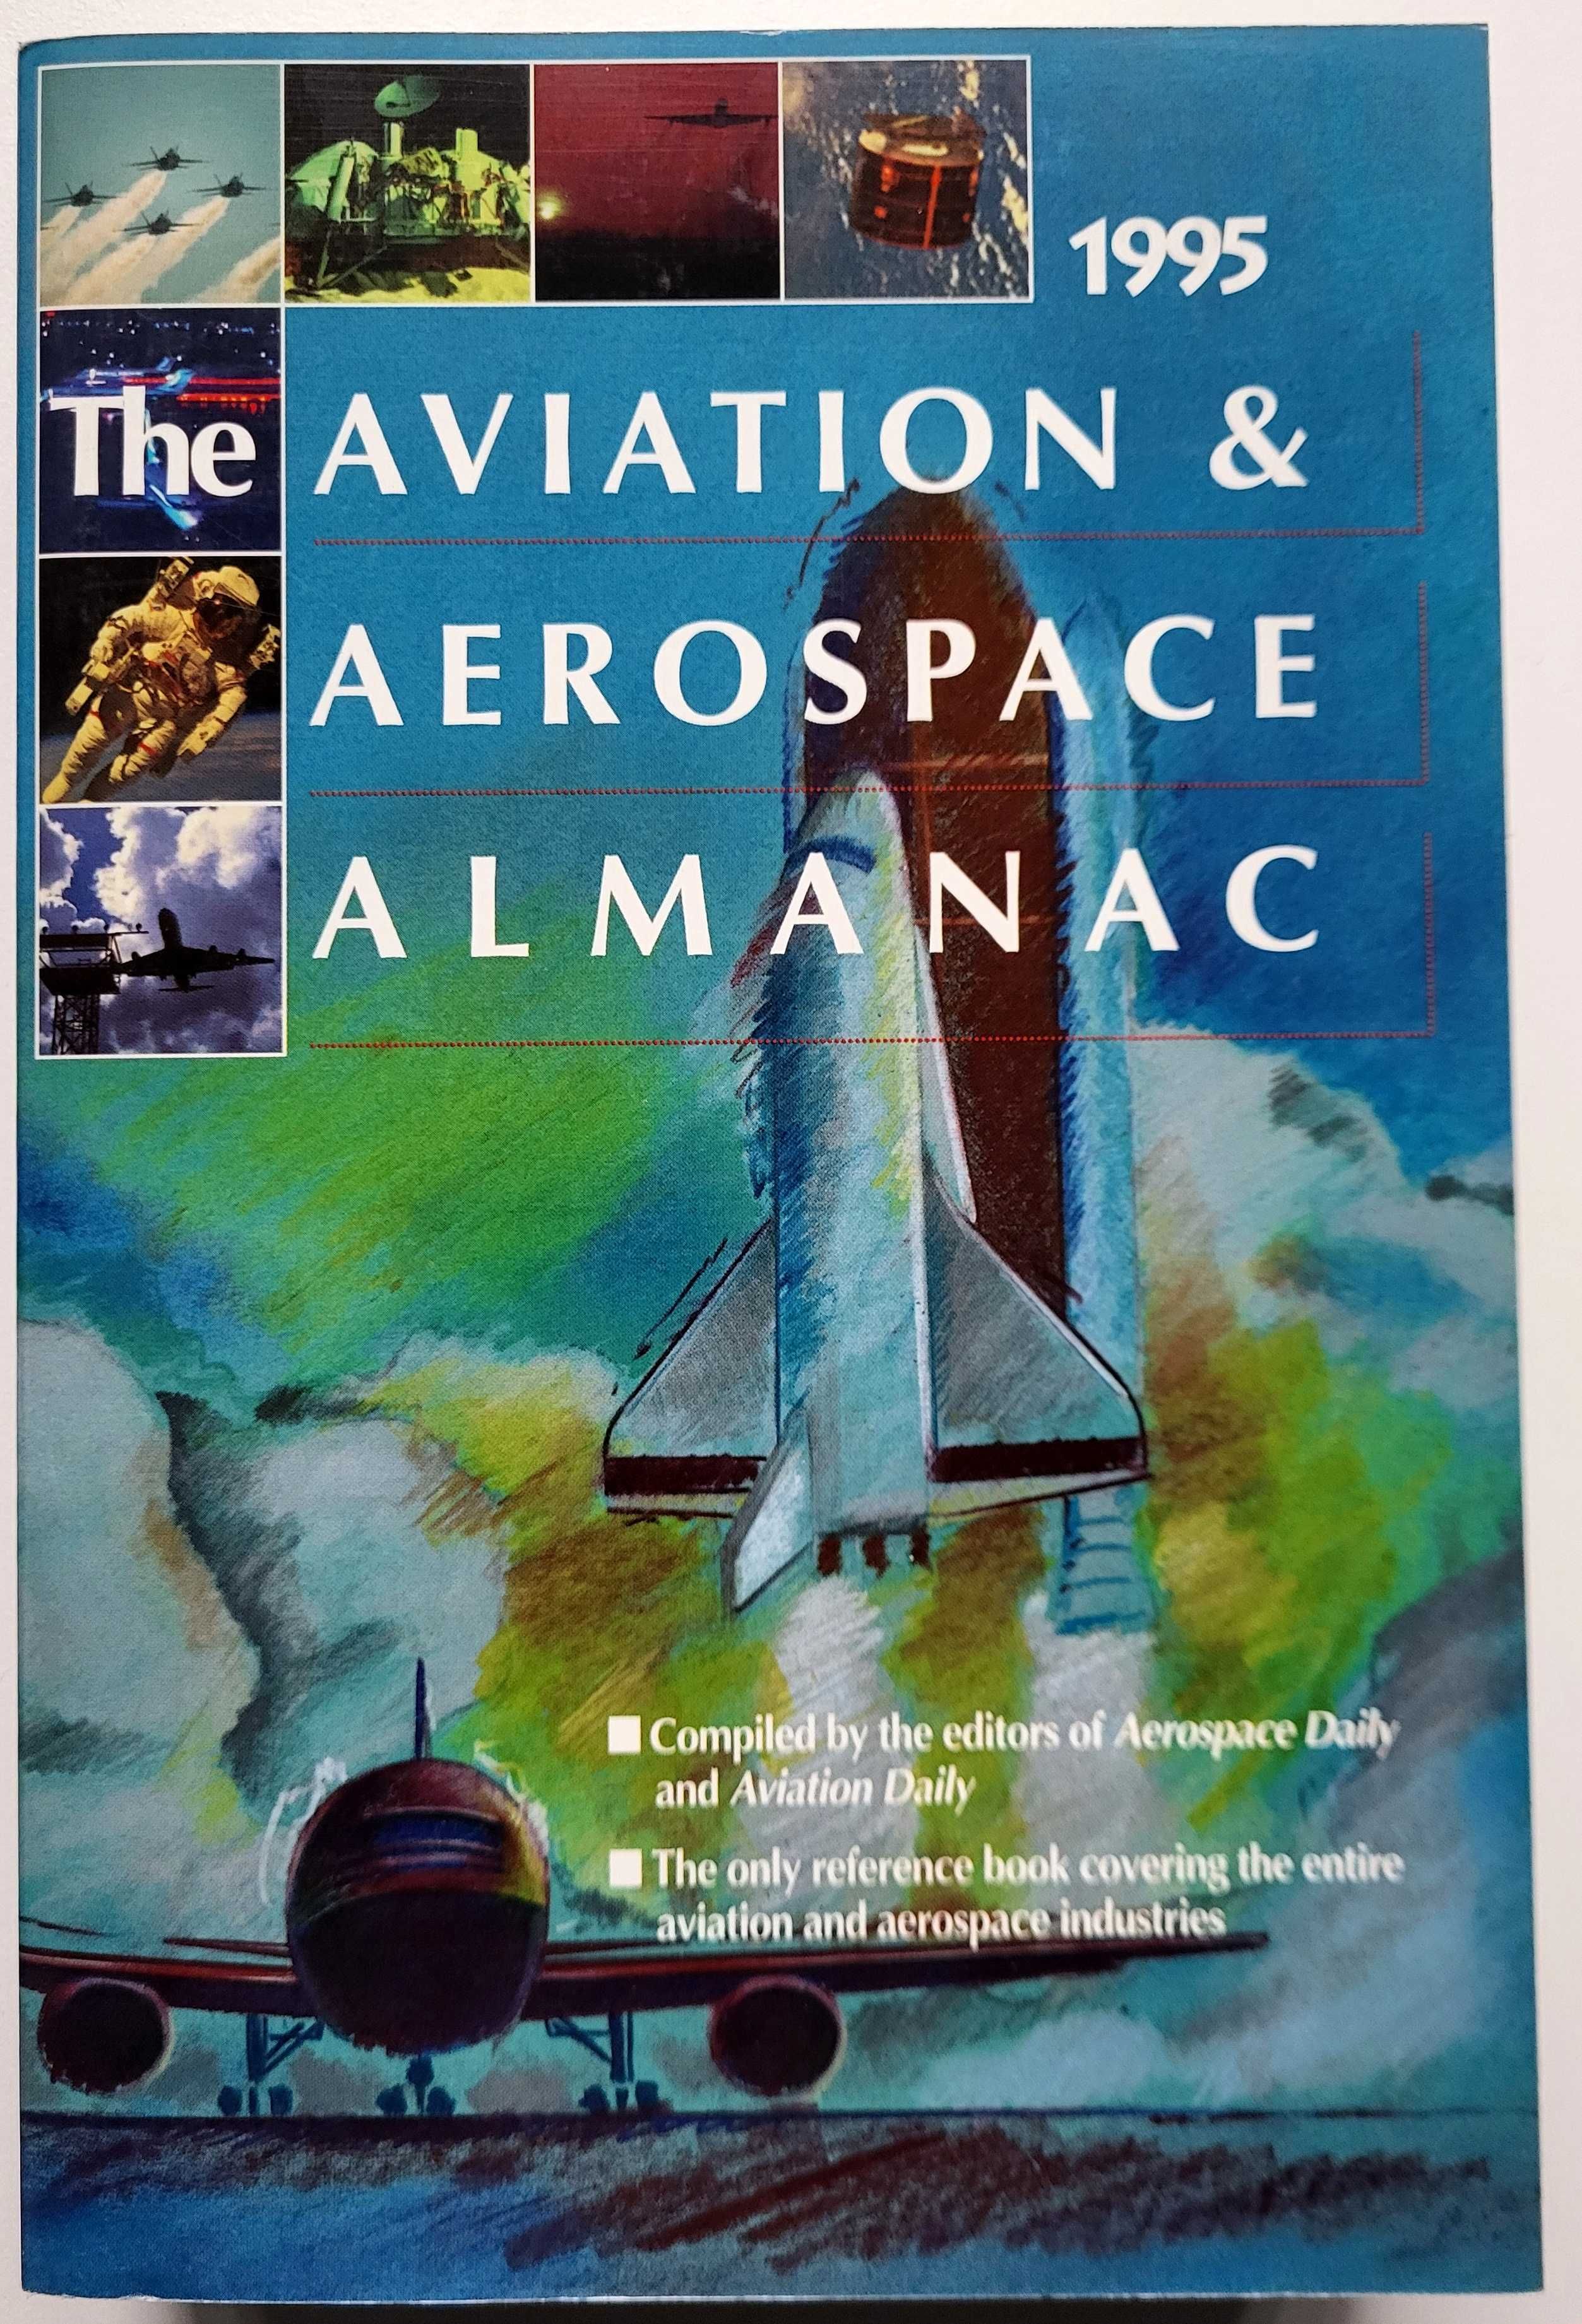 The Aviation & Aerospace Almanac 1995